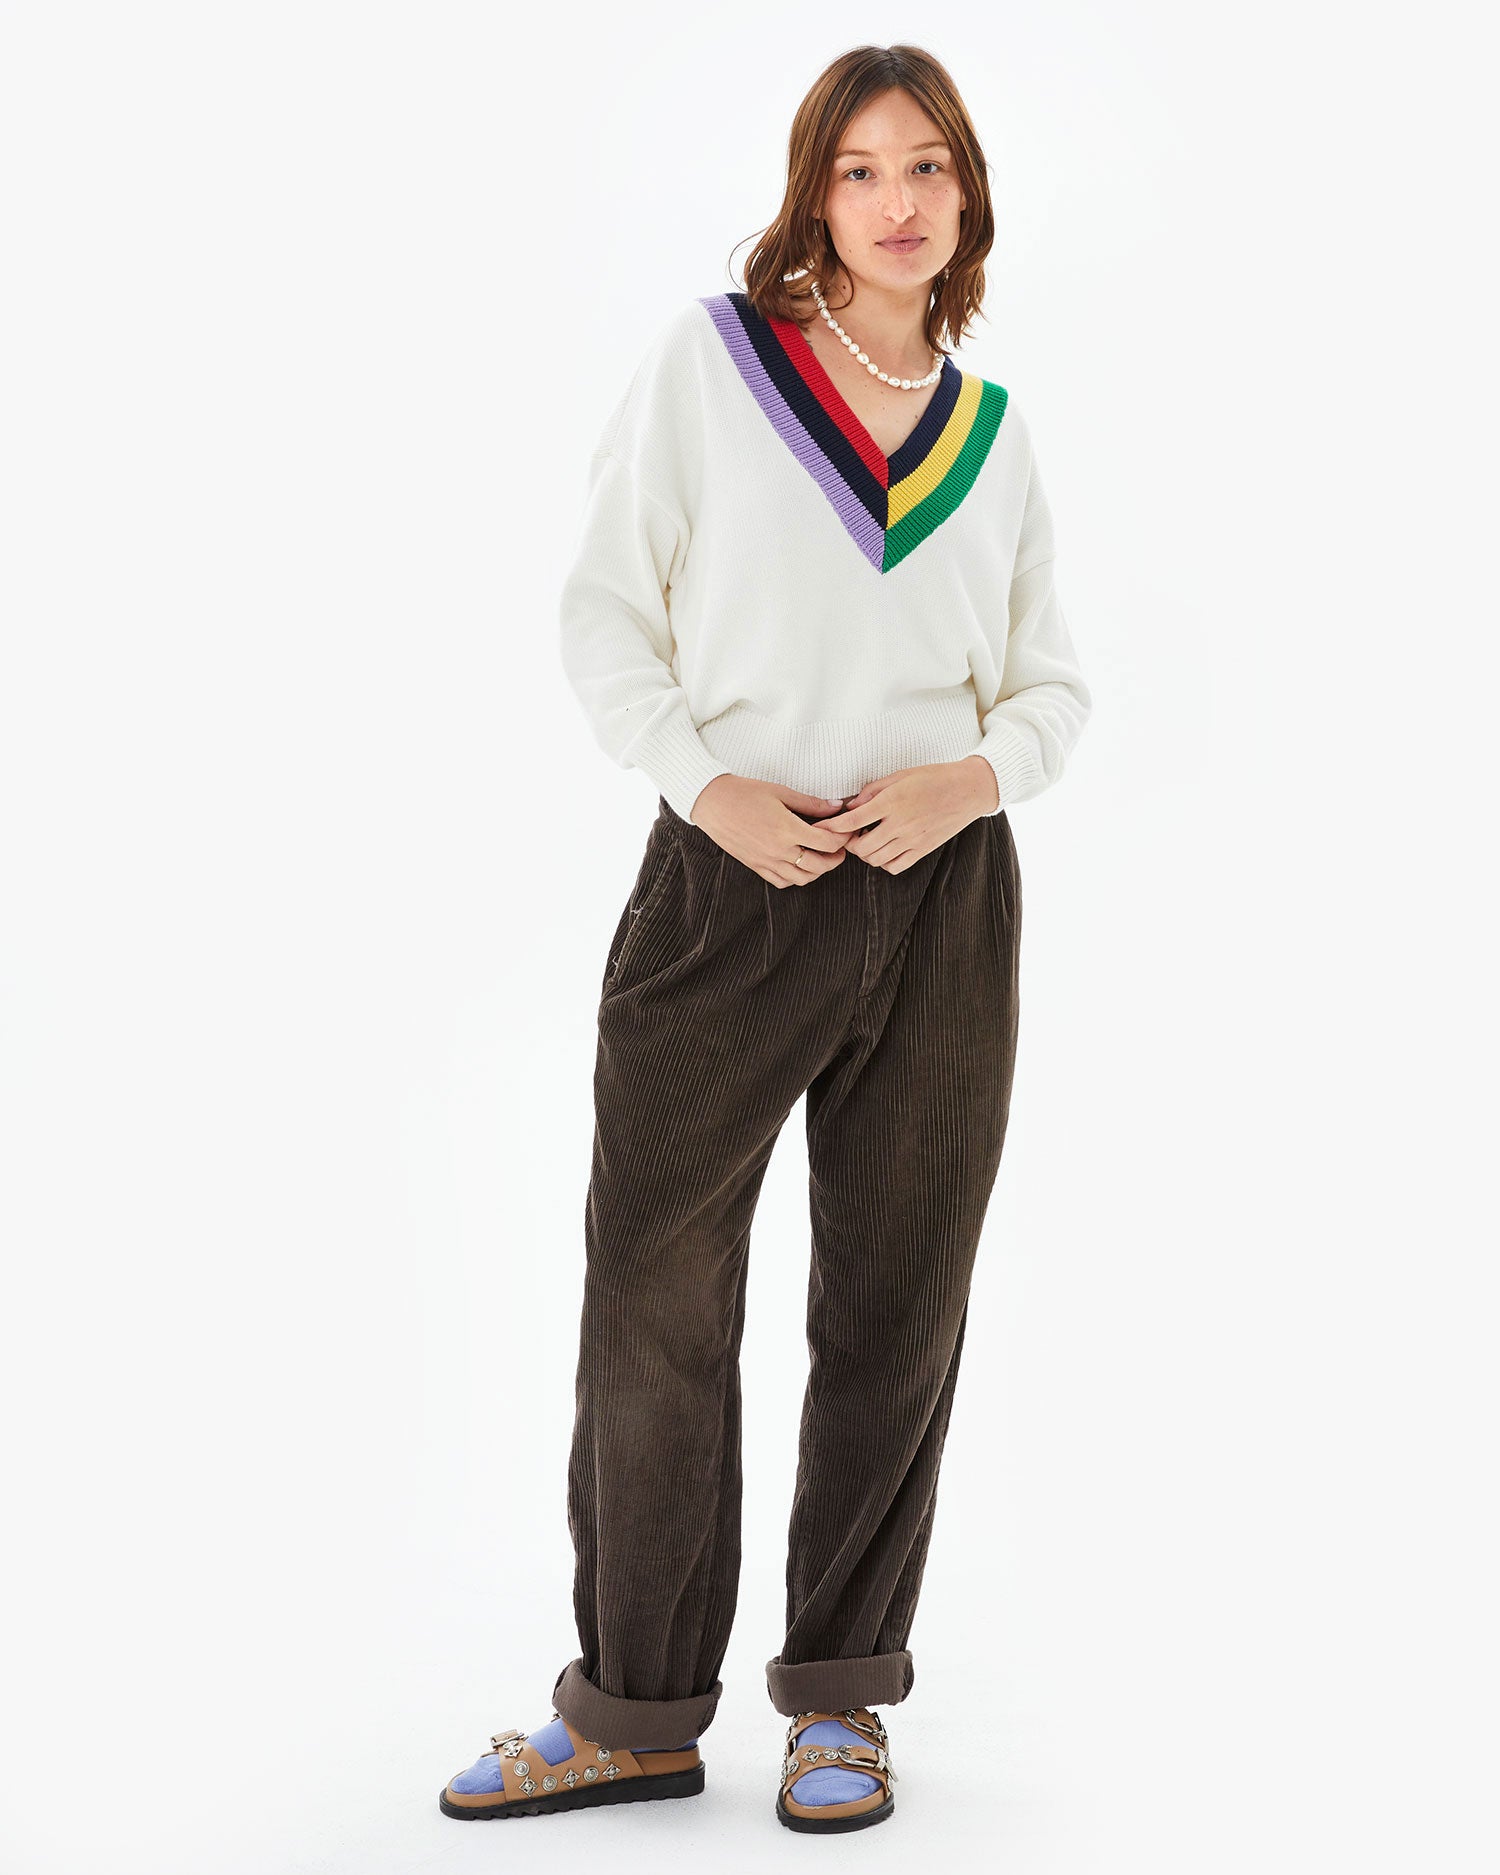 Zoe wearing the Cream w/ Multi Stripe Varsity Sweater with brown cords